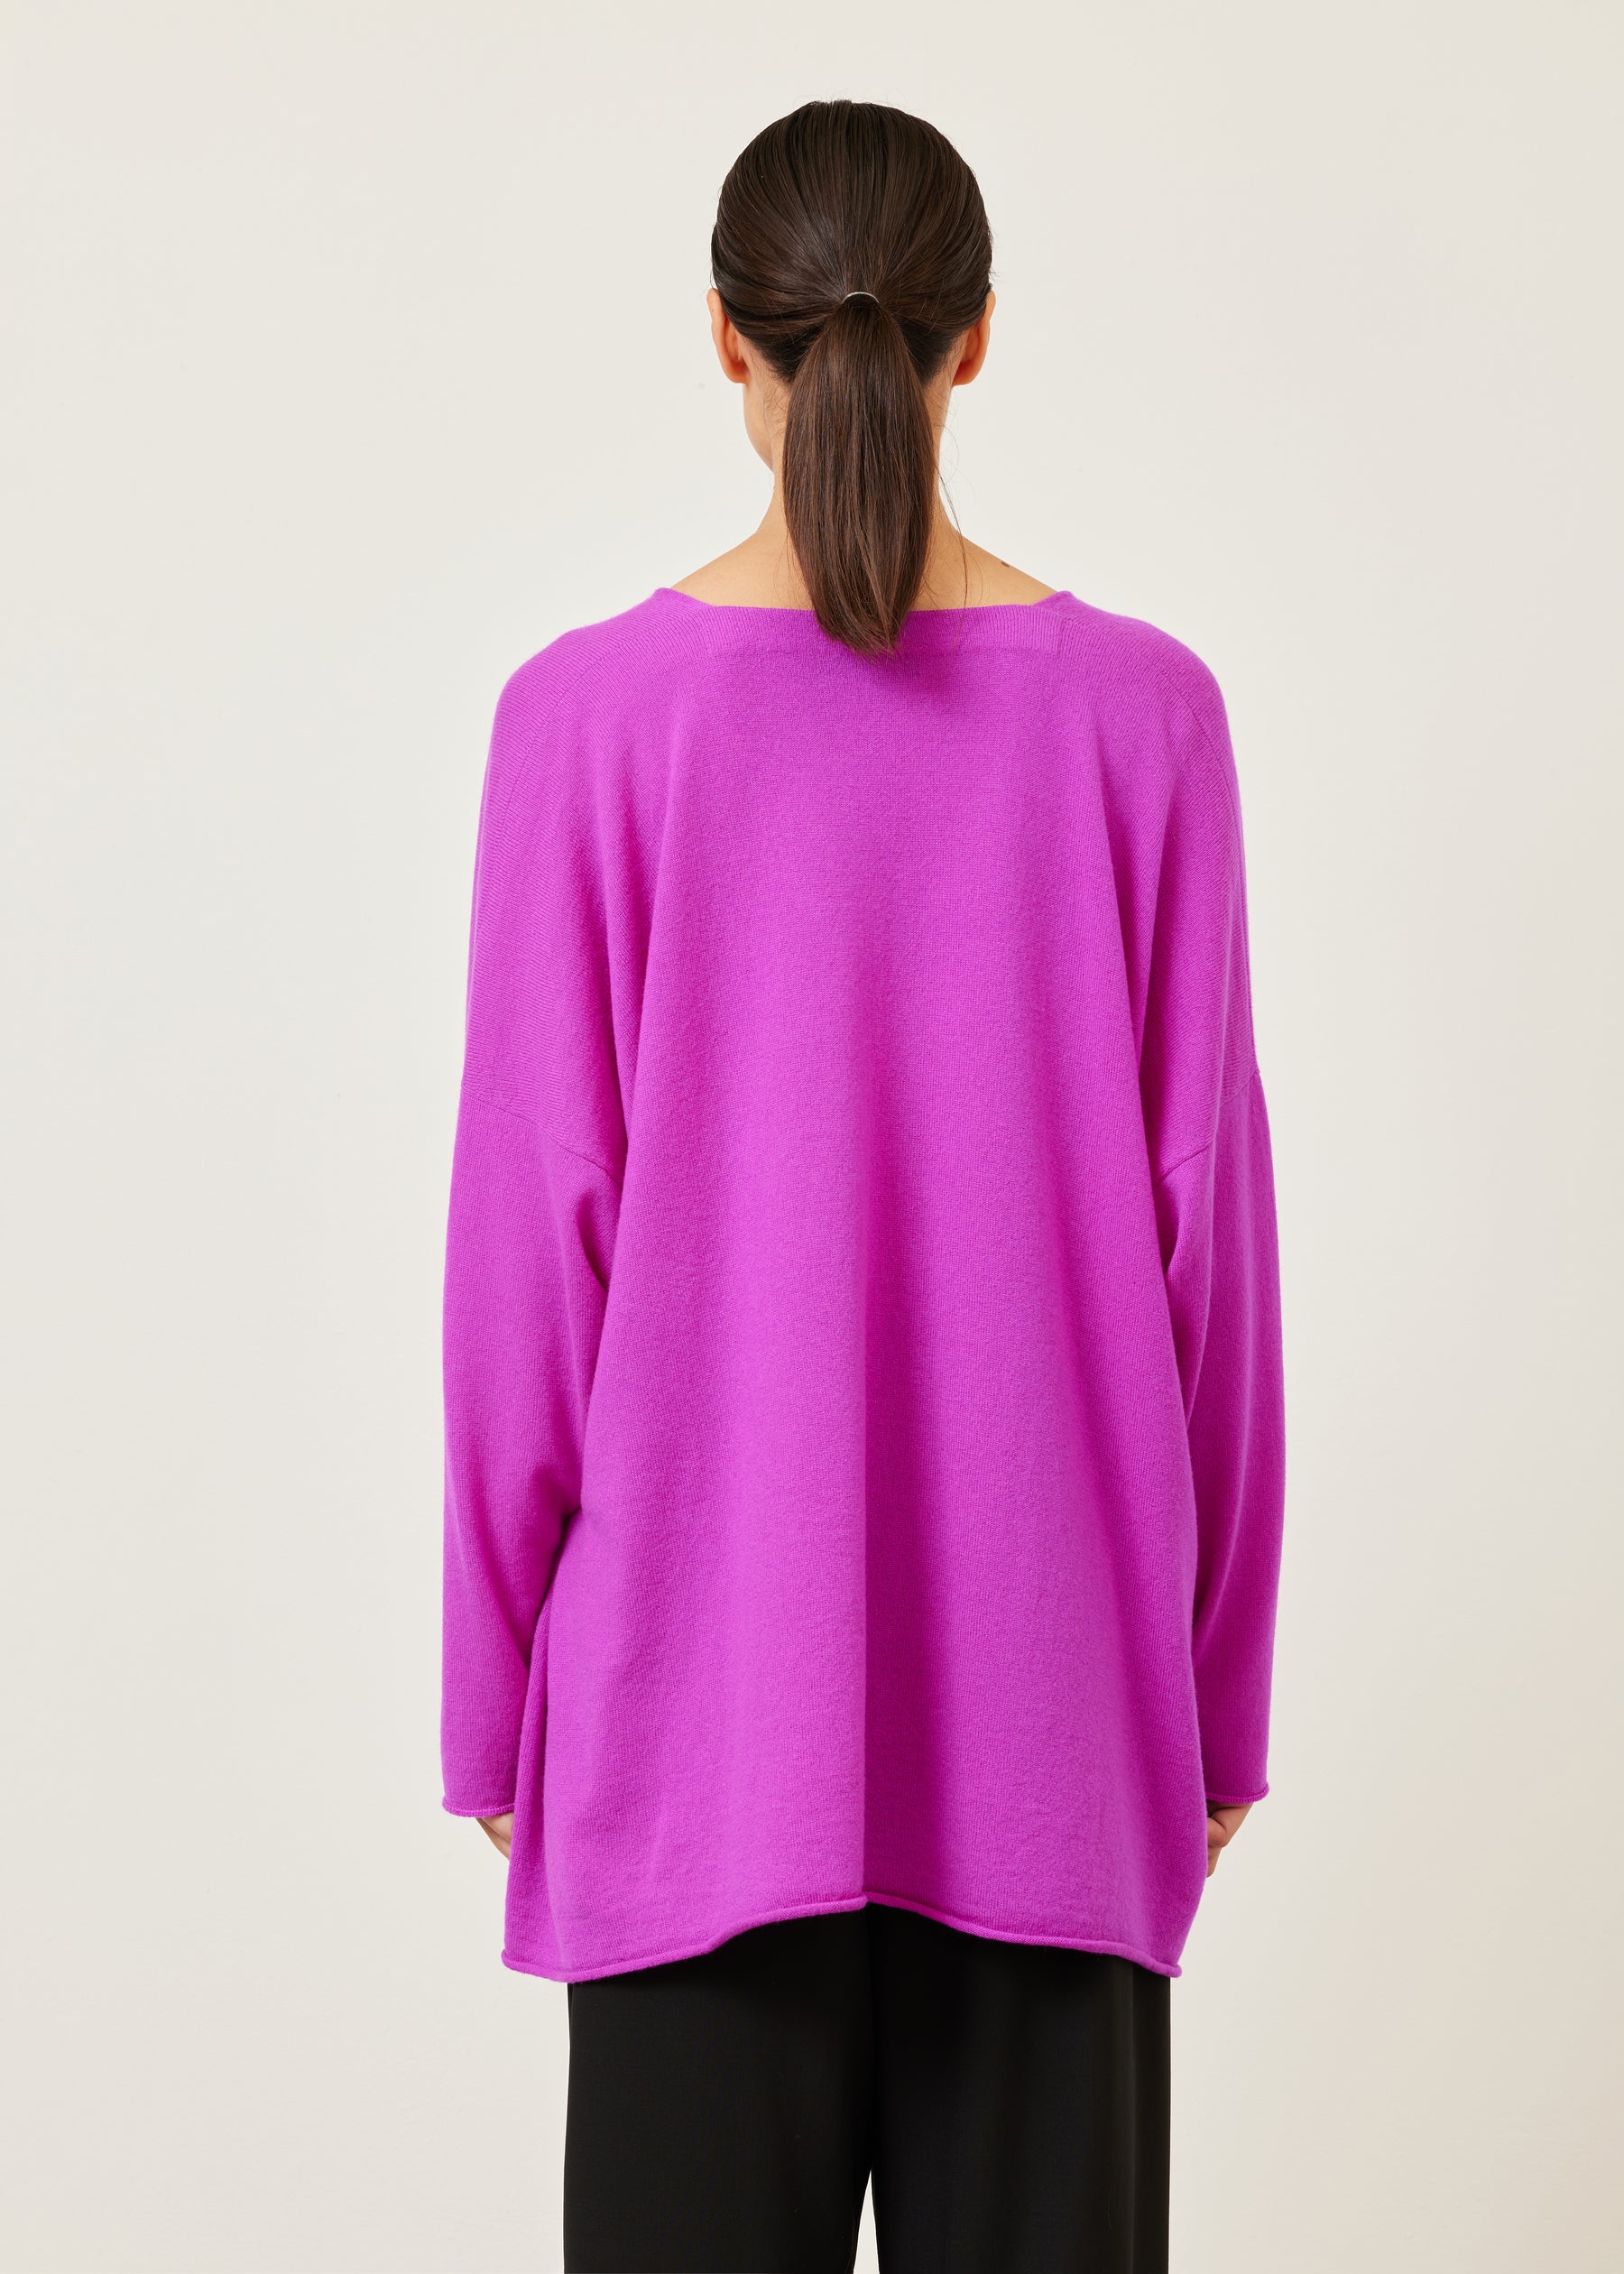 A-line v-neck sweater - long